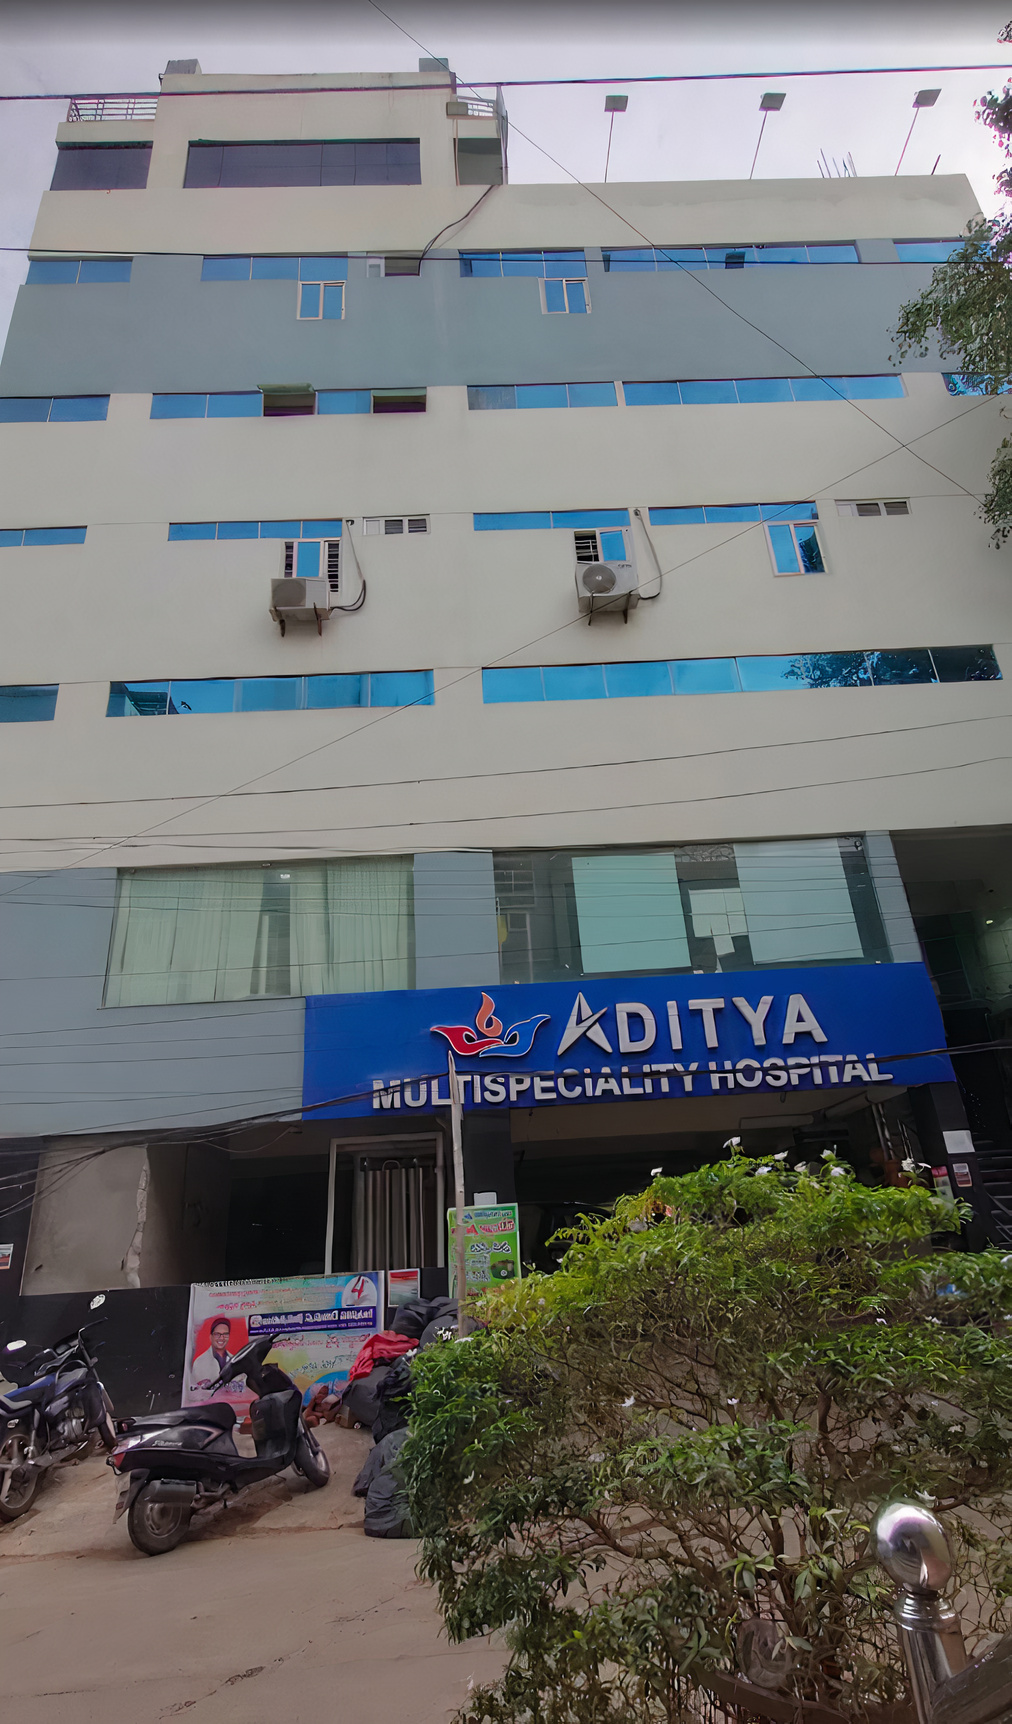 Aditya Multi Speciality Hospital